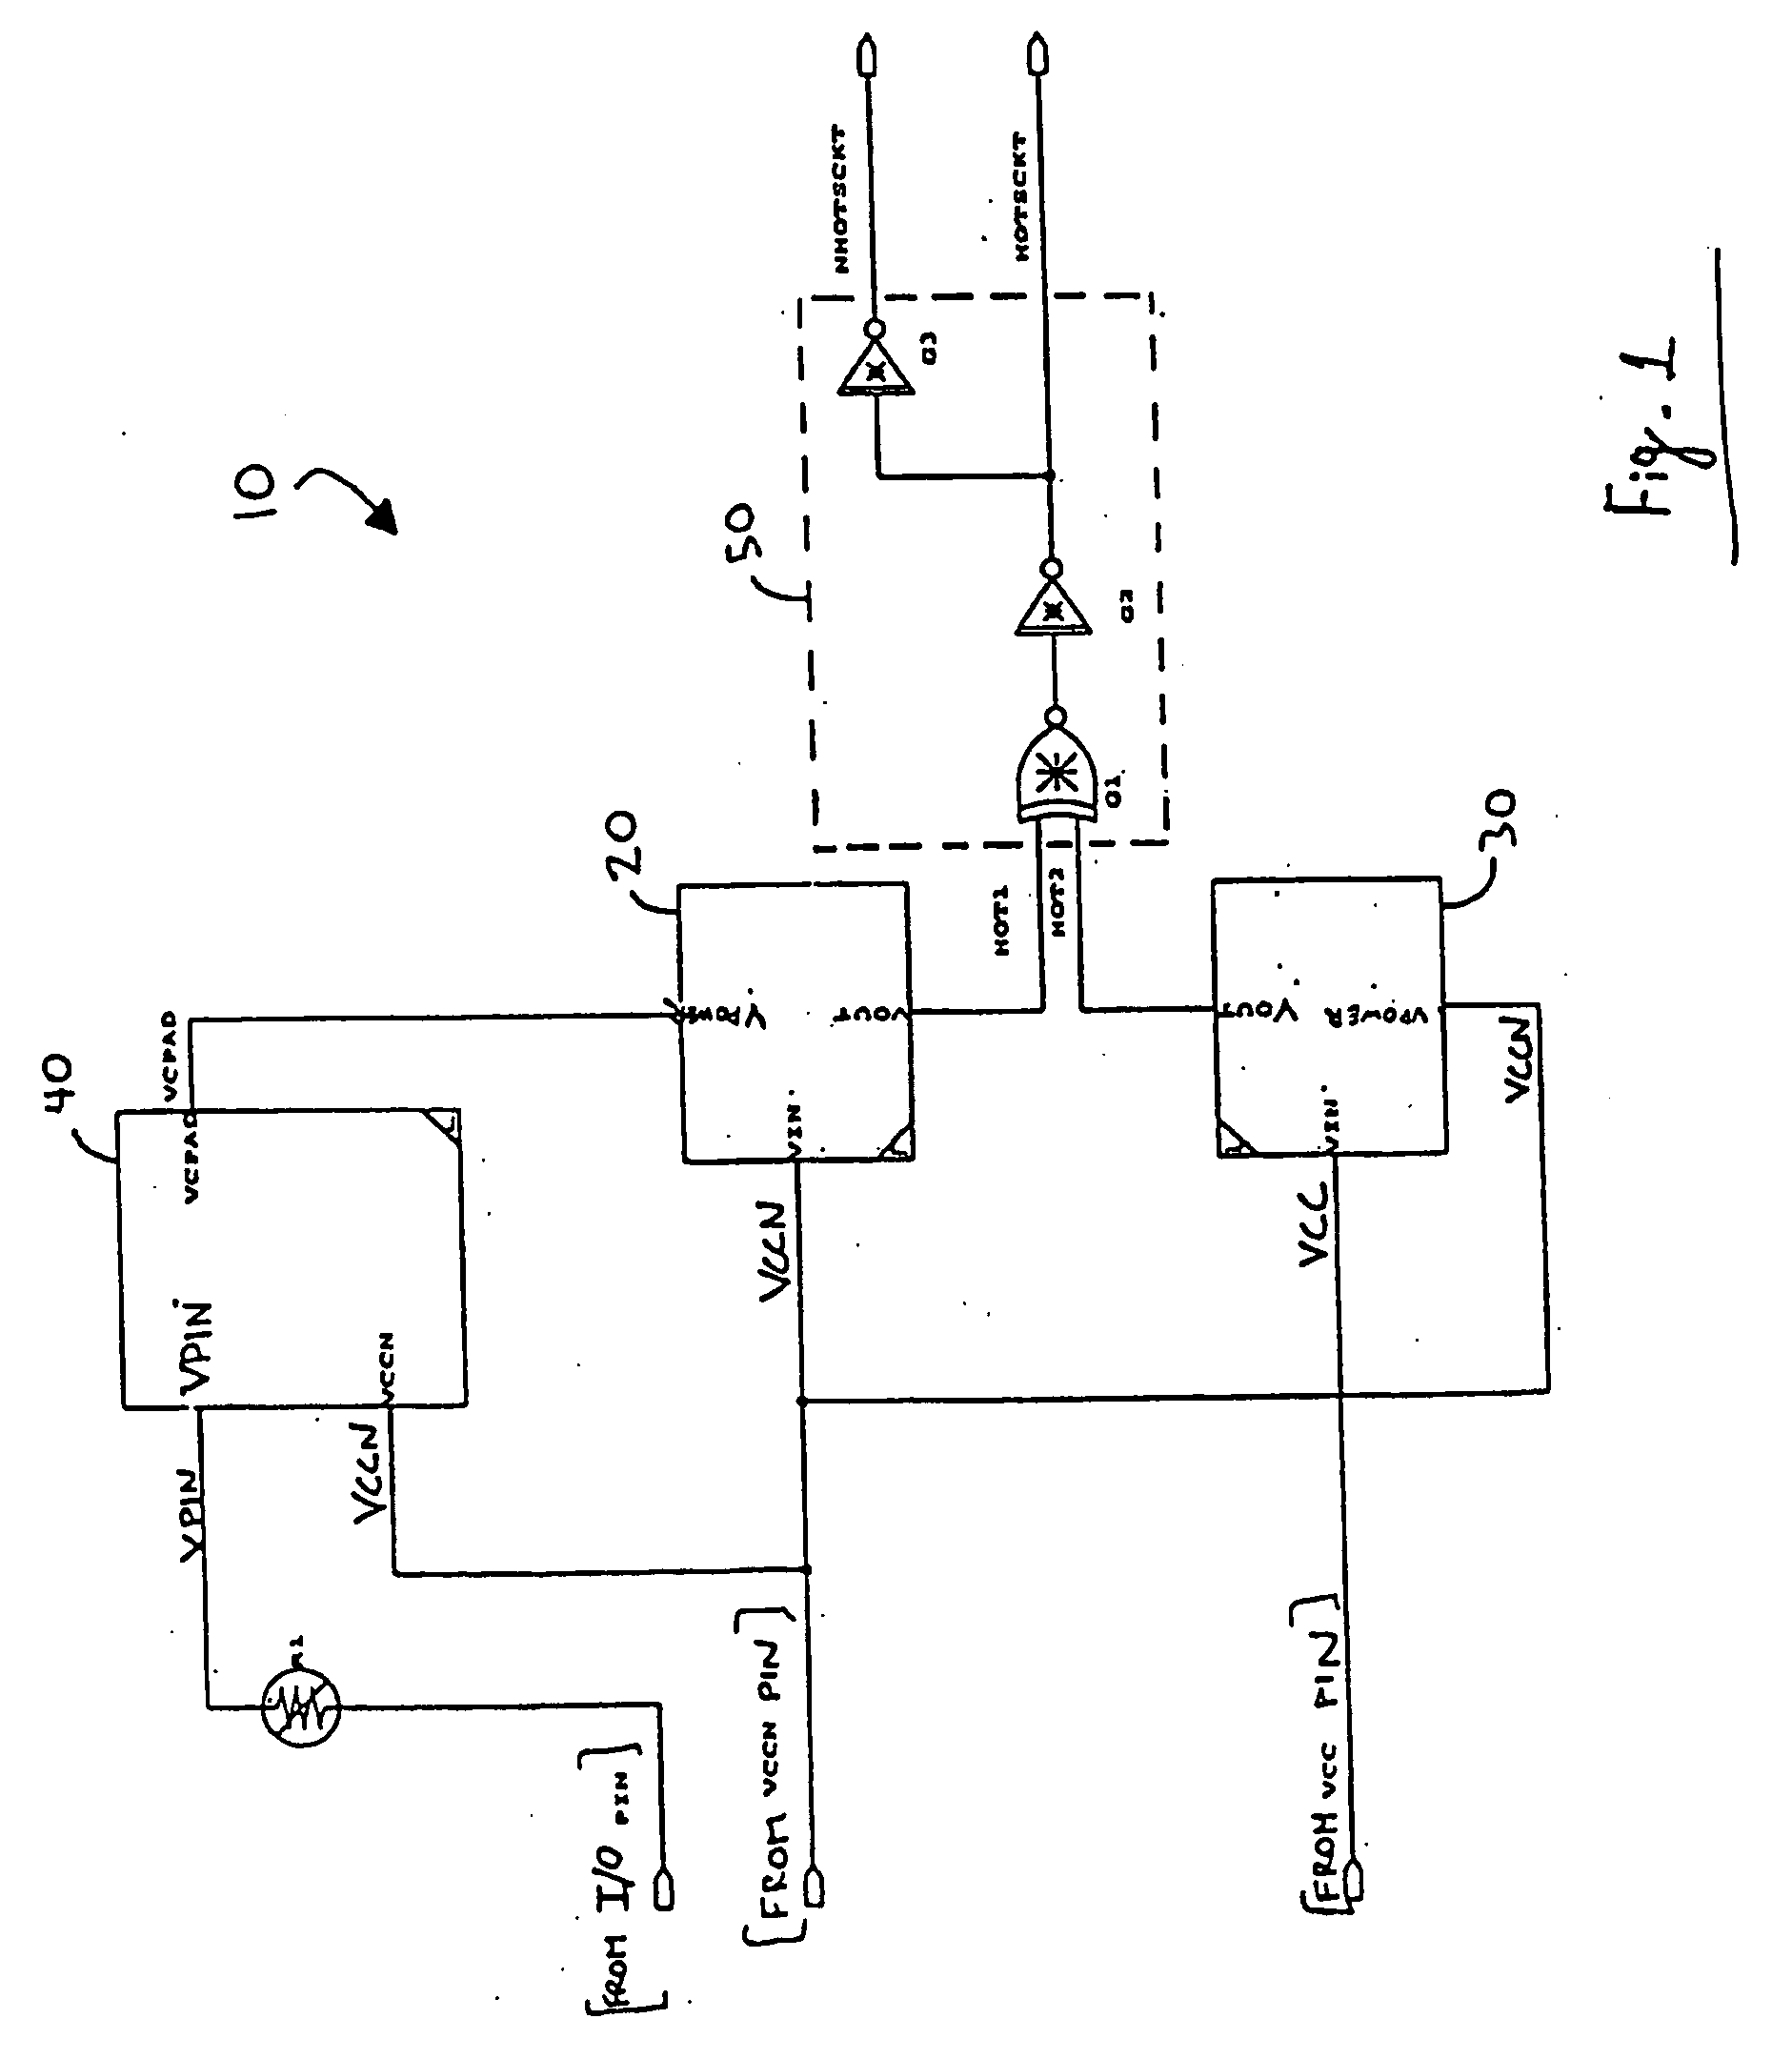 Supply voltage detection circuit